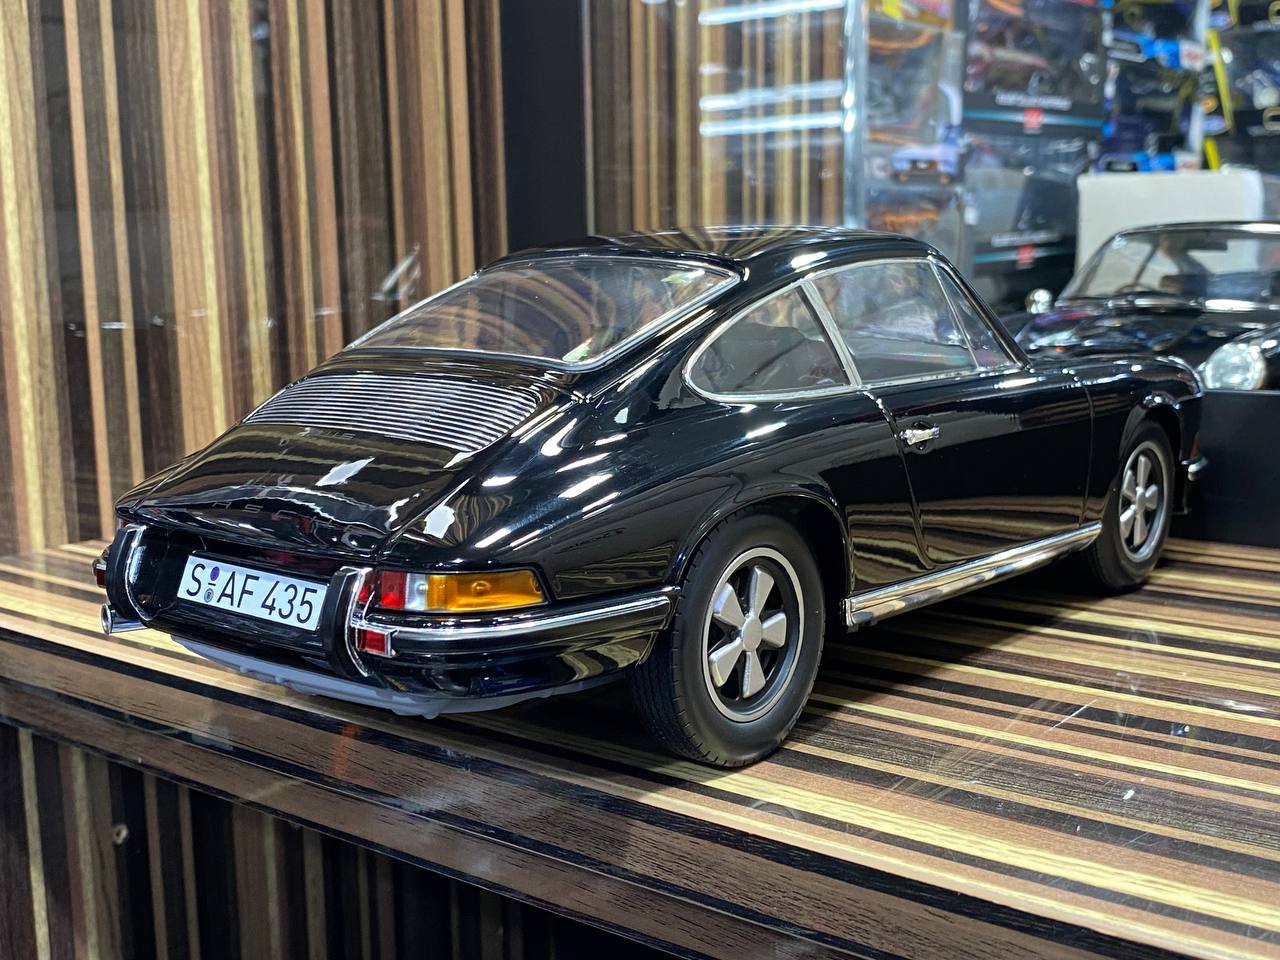 1/18 Diecast Porsche 911 S 1972 Black Norev Scale Model Car|Sold in Dturman.com Dubai UAE.